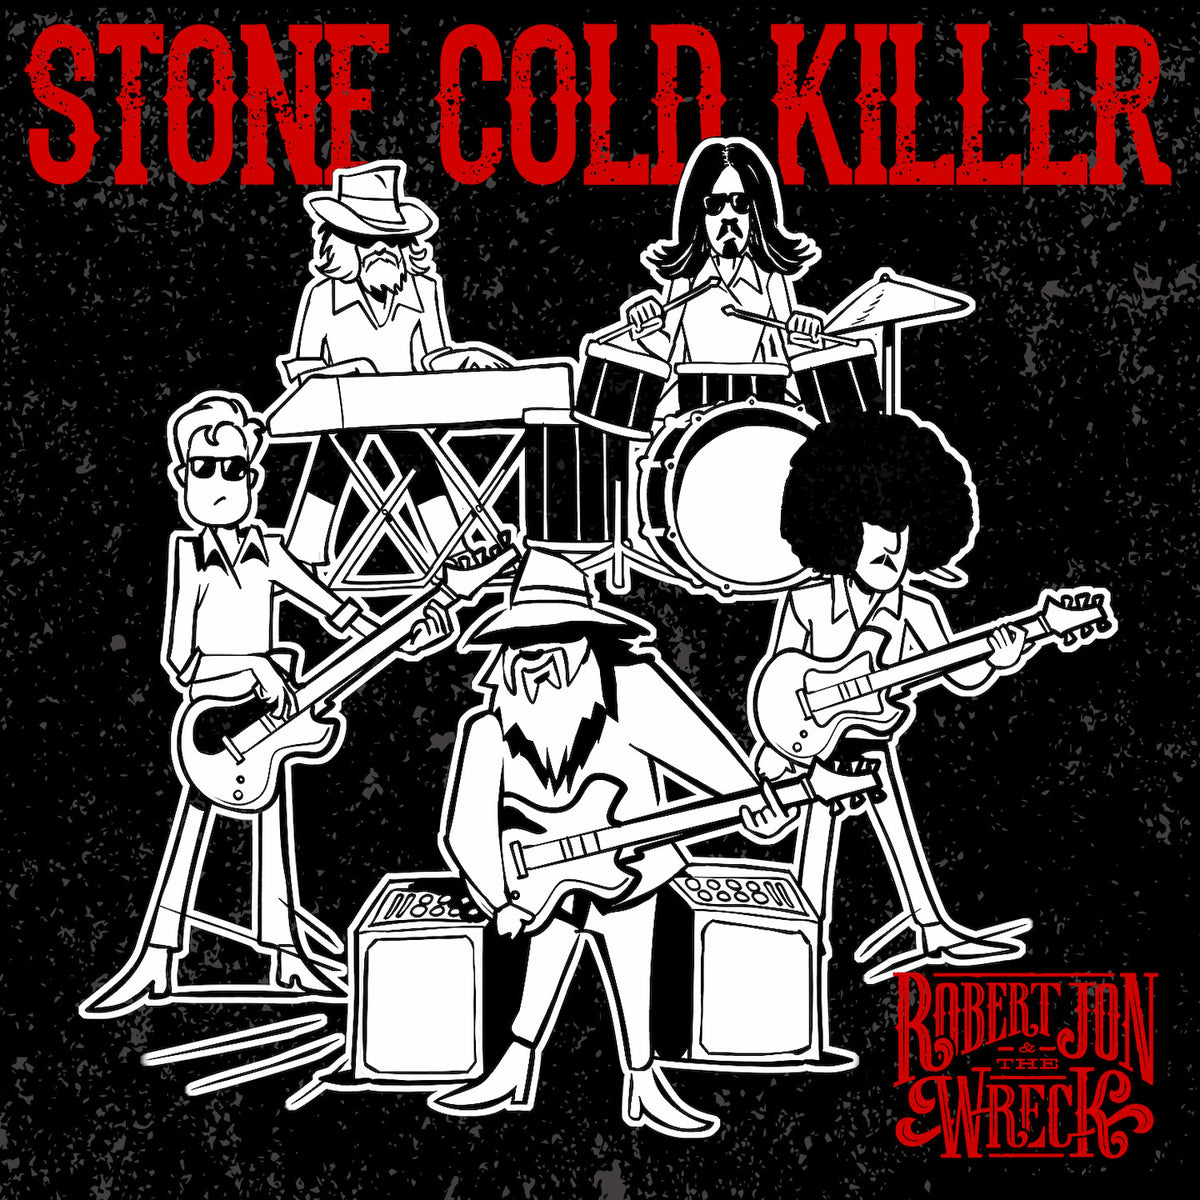 Robert Jon & The Wreck: "Stone Cold Killer" - Single